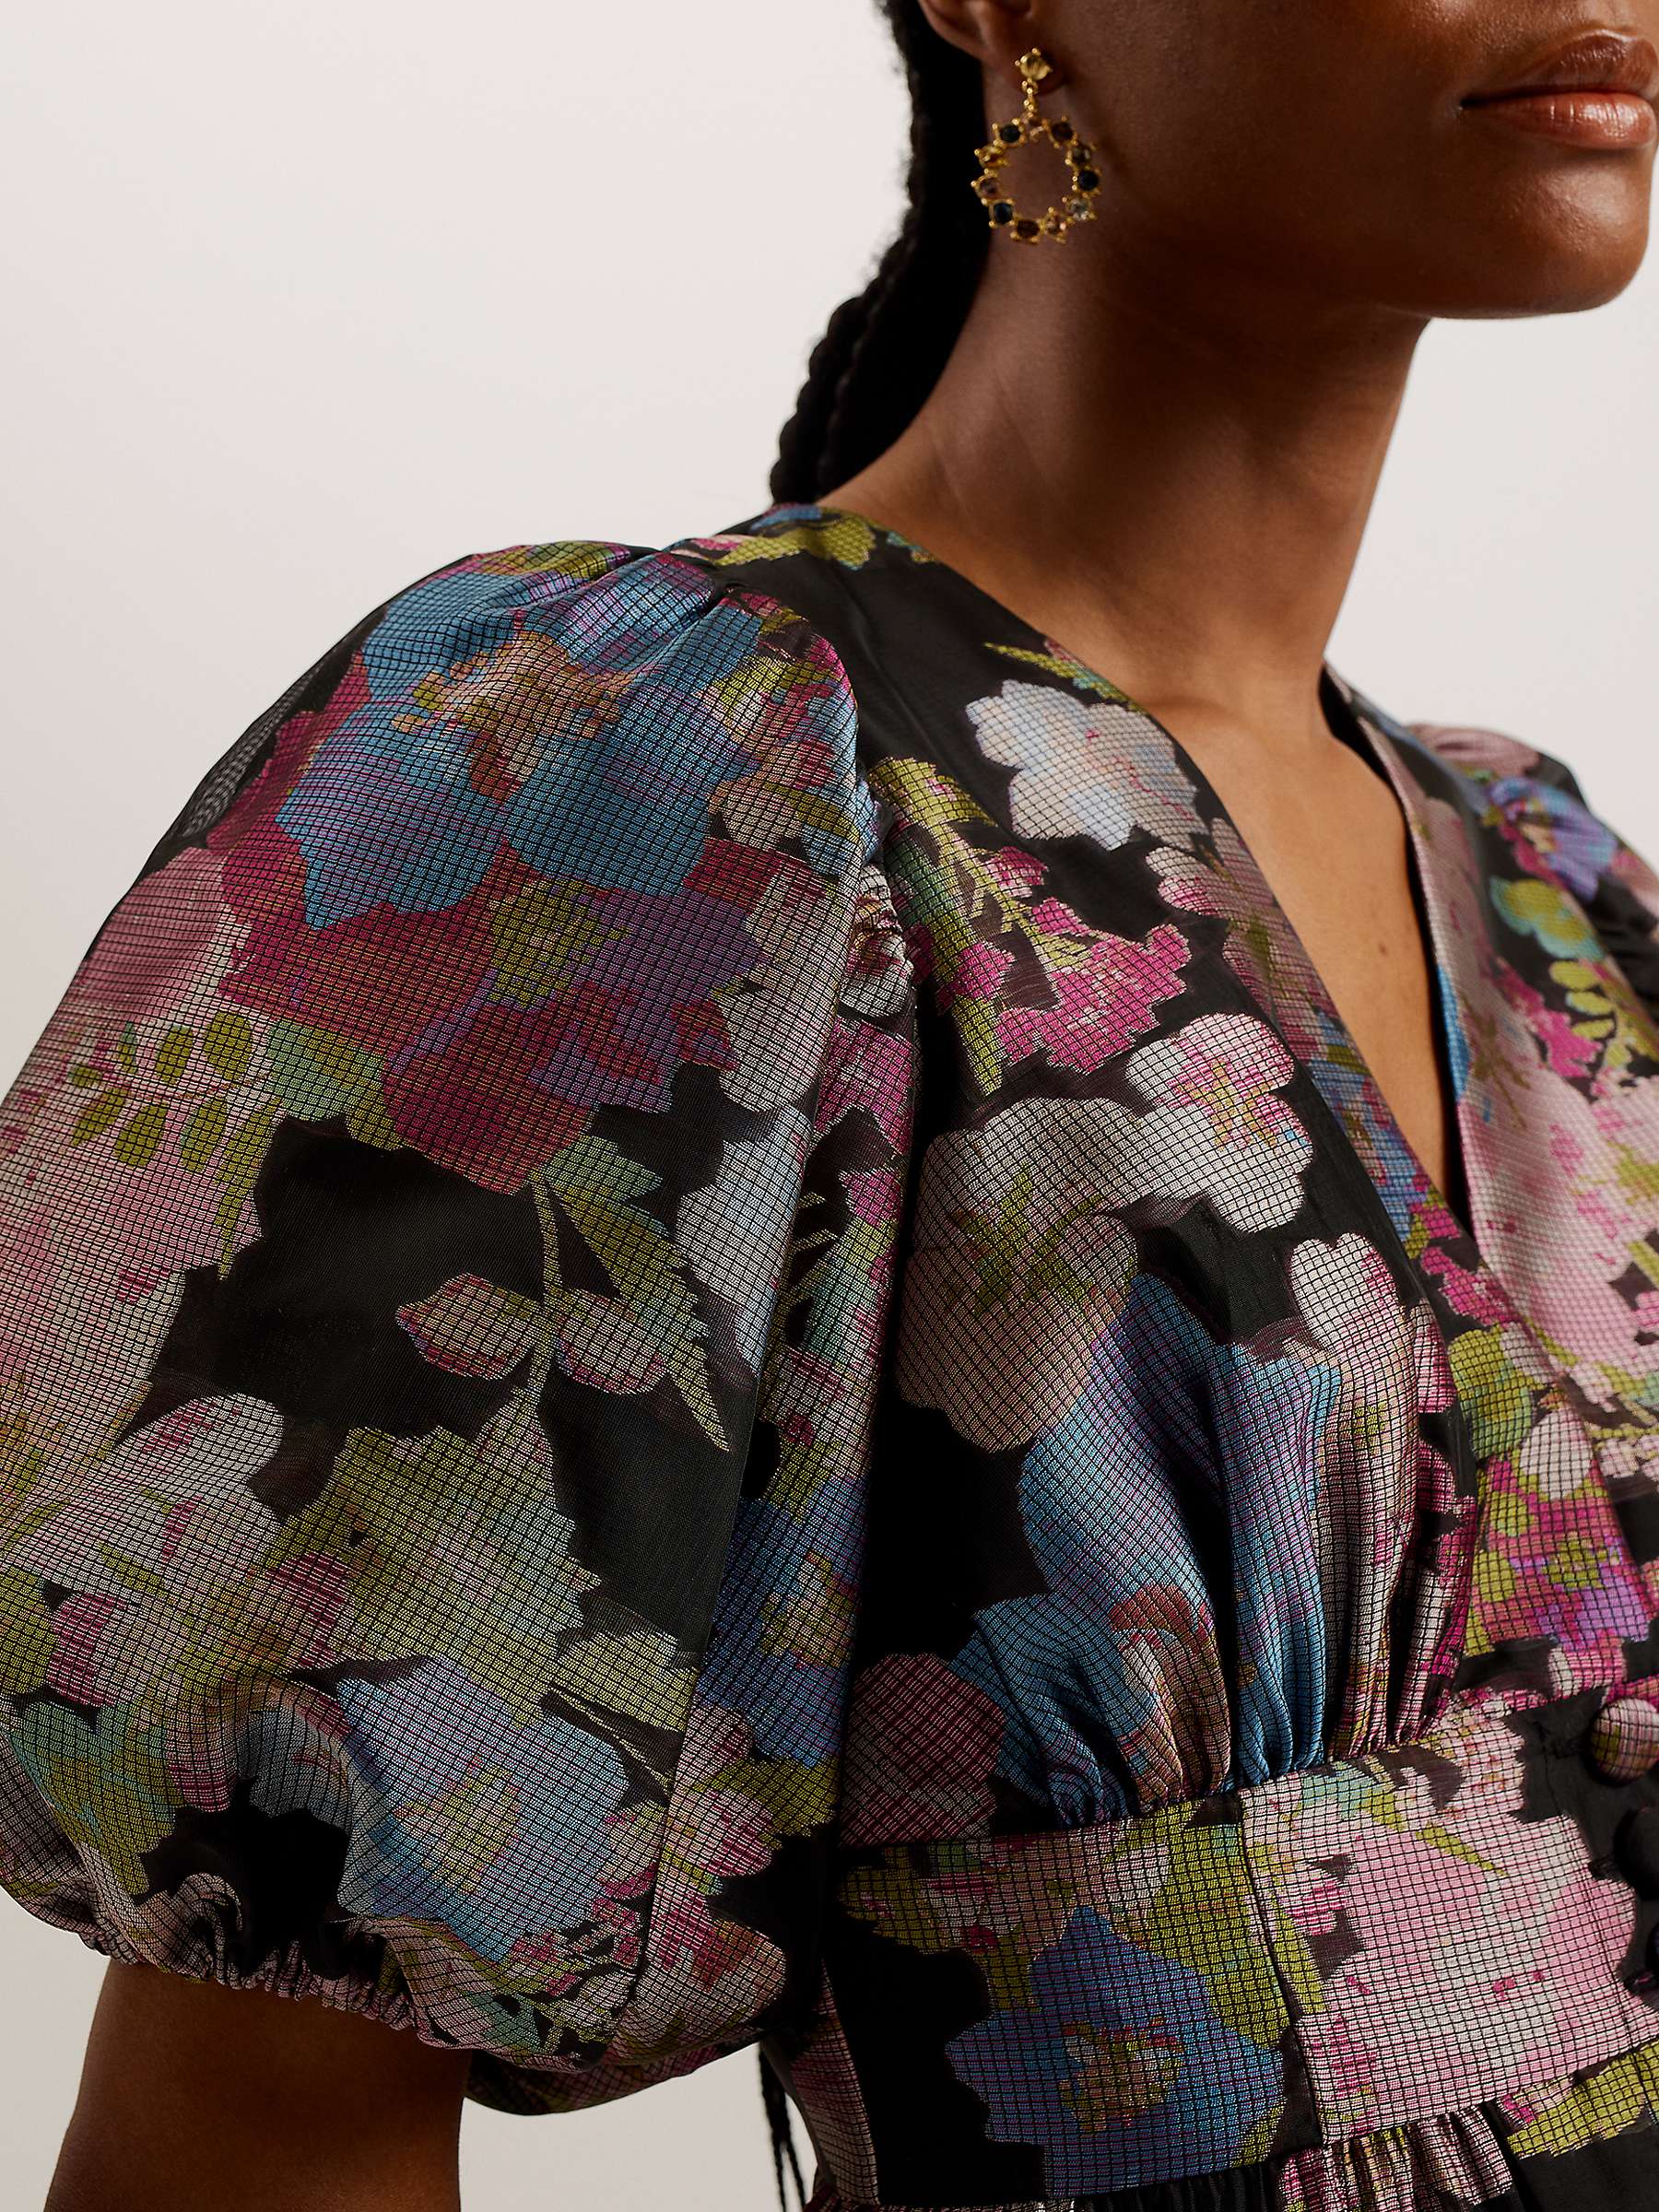 Buy Ted Baker Matsea Button Front Floral Jacquard Dress, Black/Multi Online at johnlewis.com